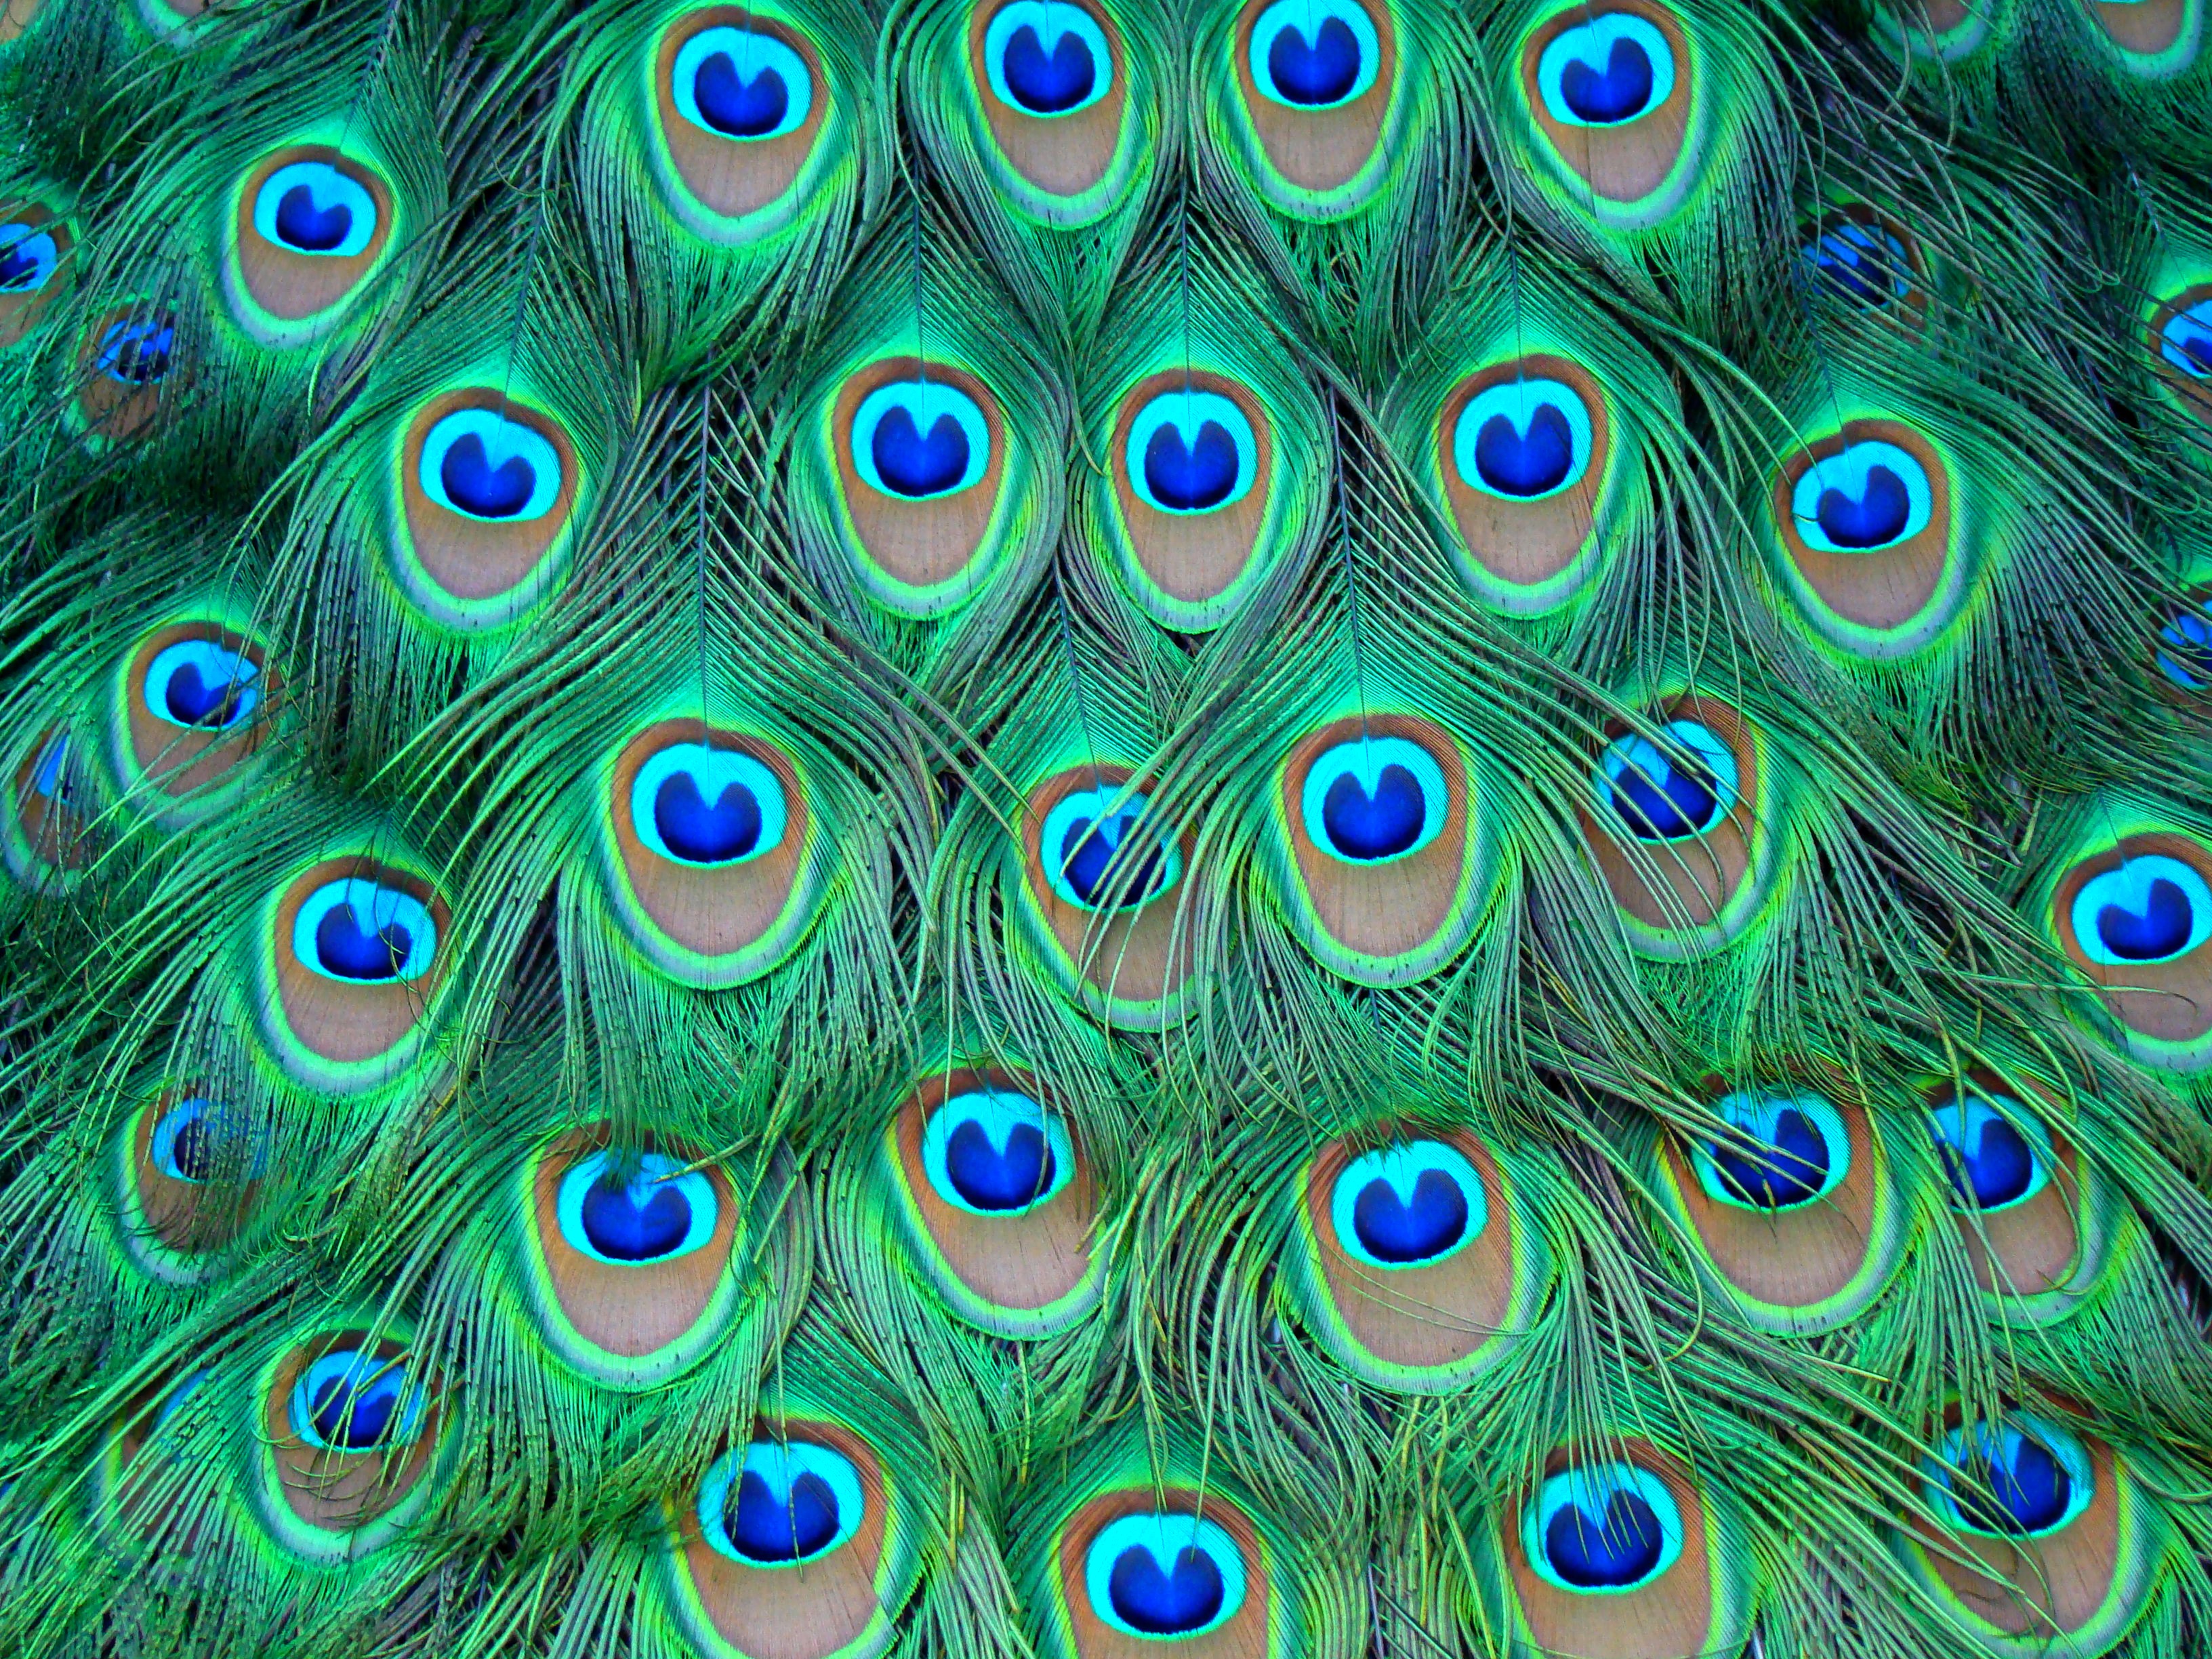 Peacock feathers wallpaper   ForWallpapercom